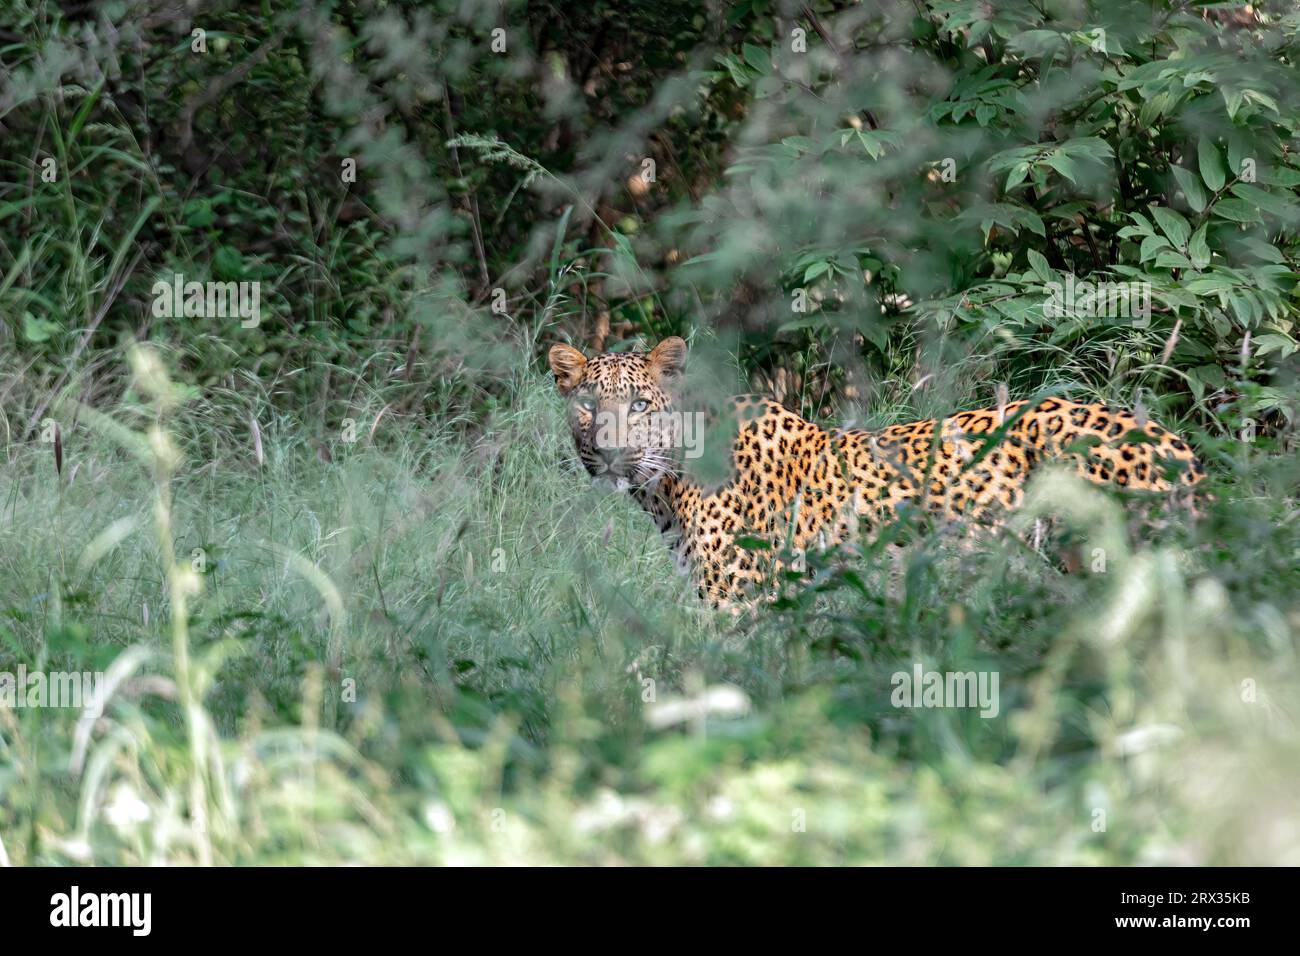 Spotted you - Leopard at Jhalana Leopard Reserve Stock Photo